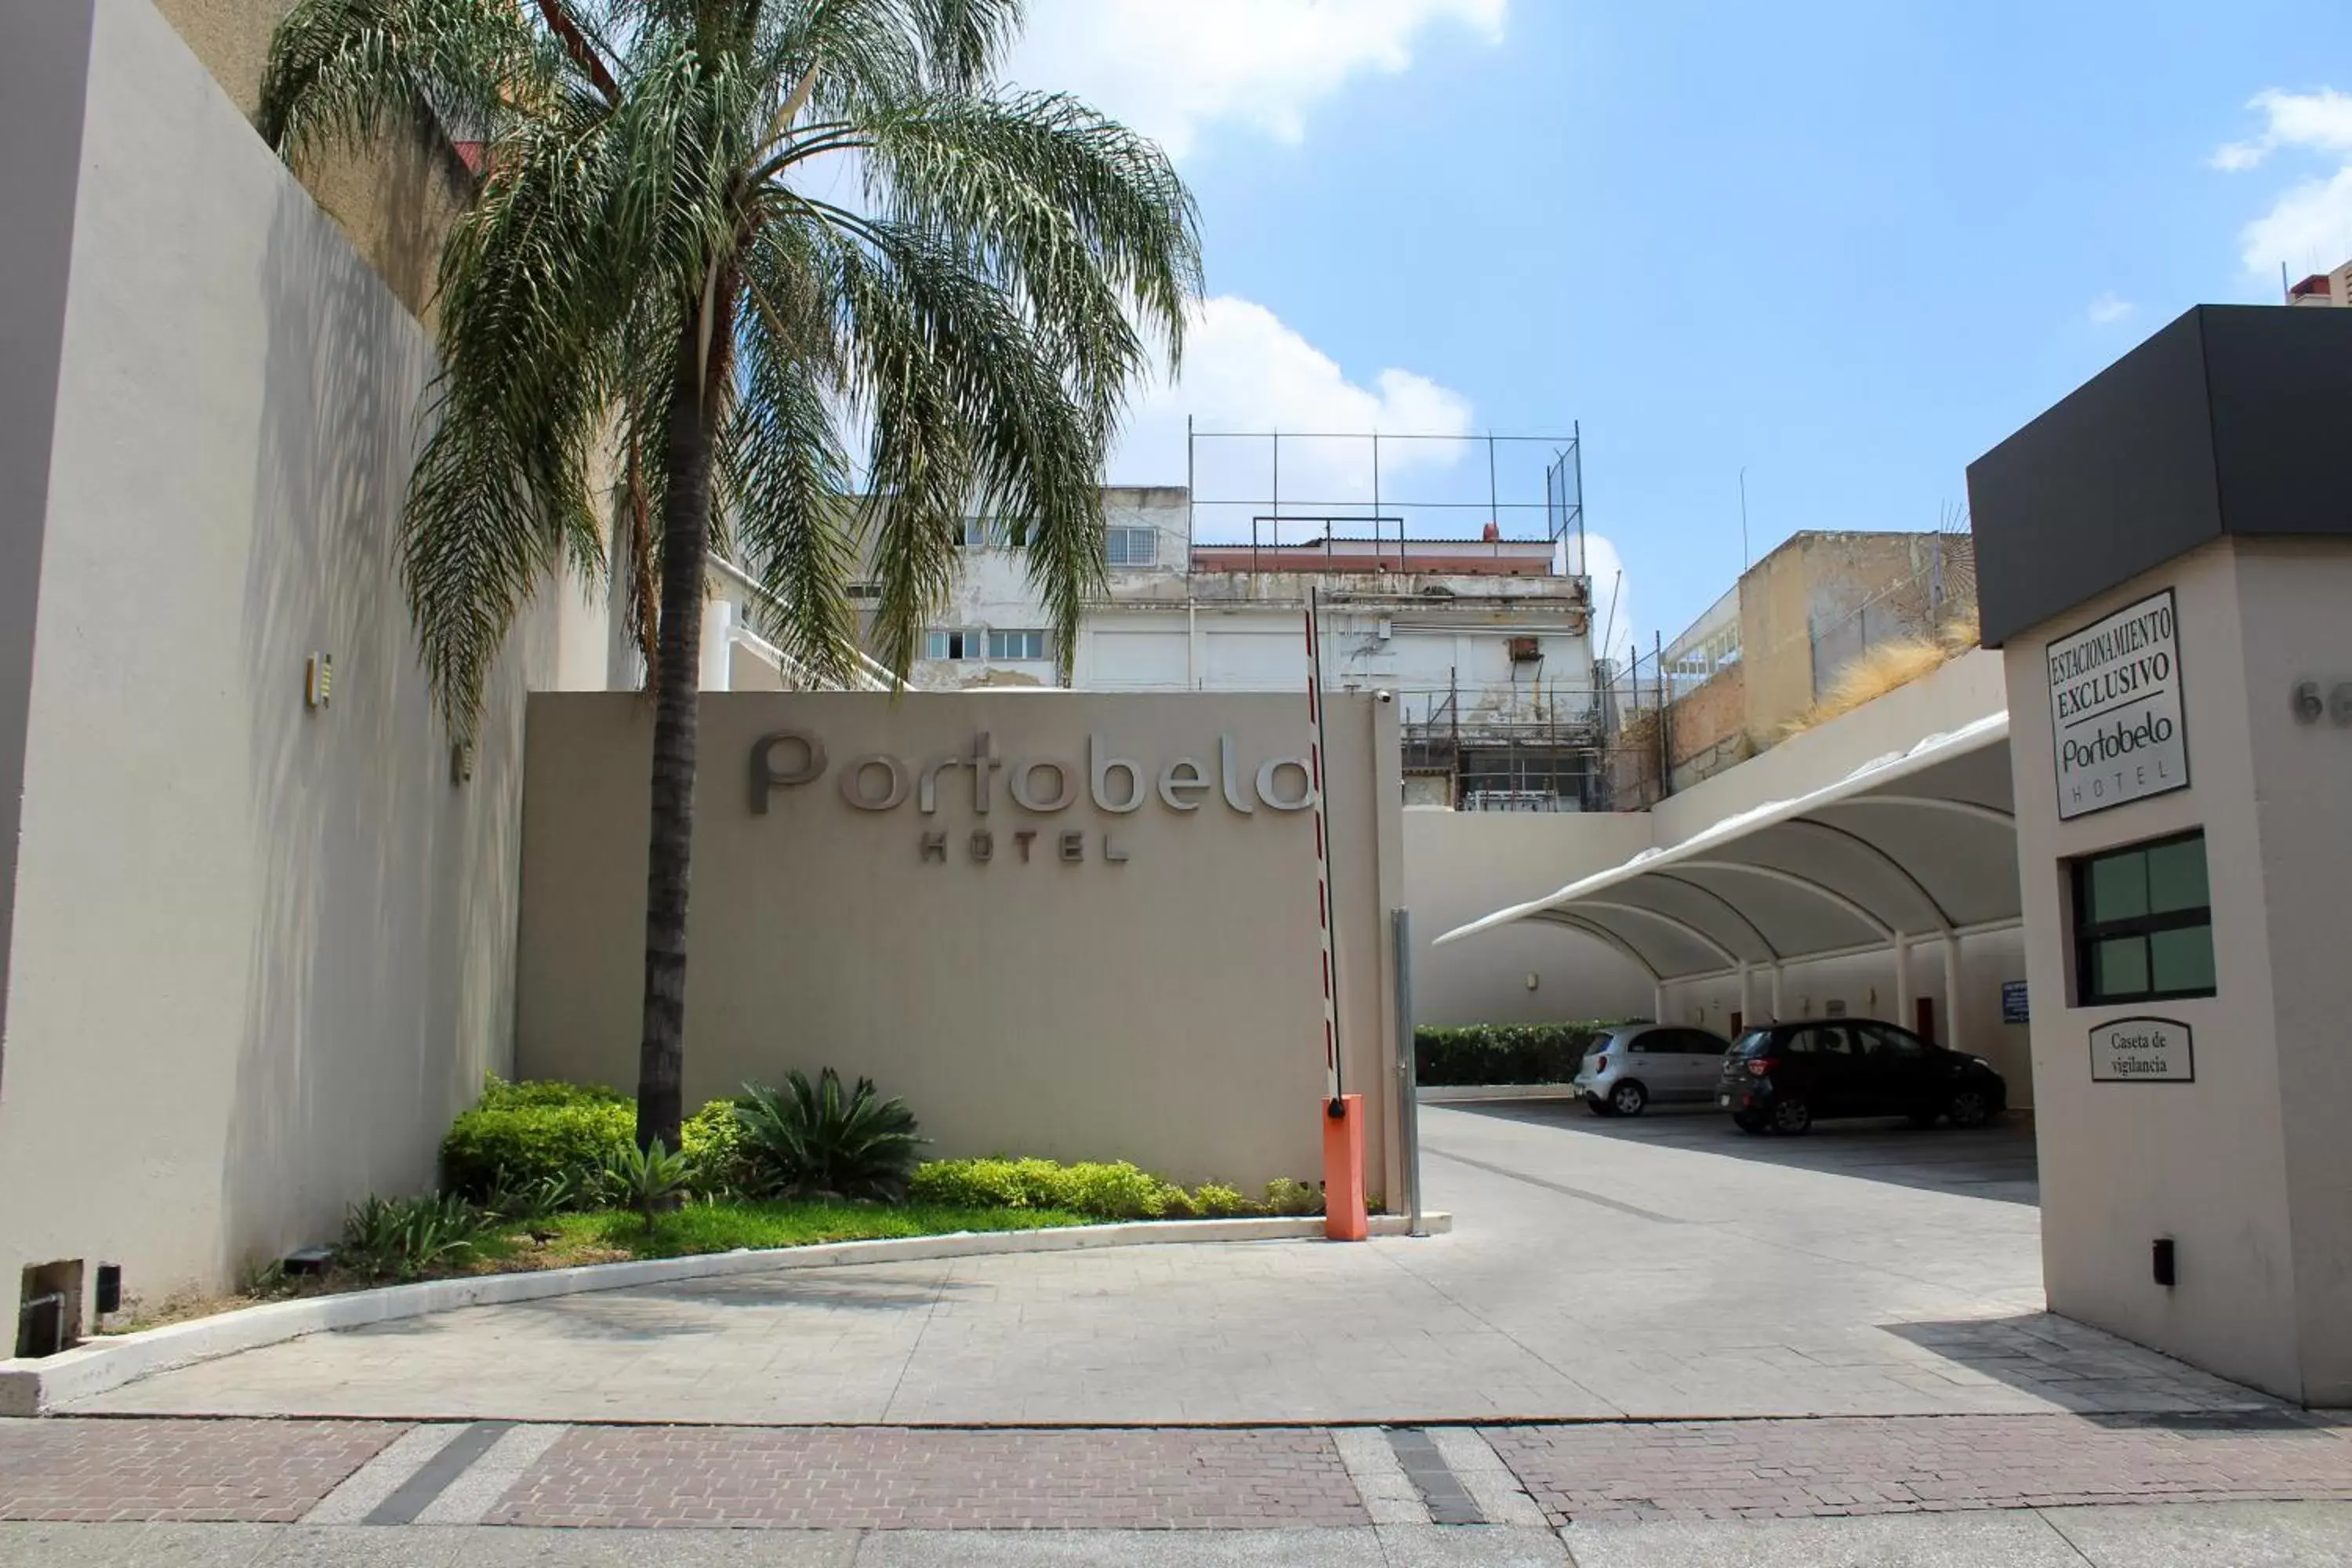 Off site, Property Building in Hotel Portobelo